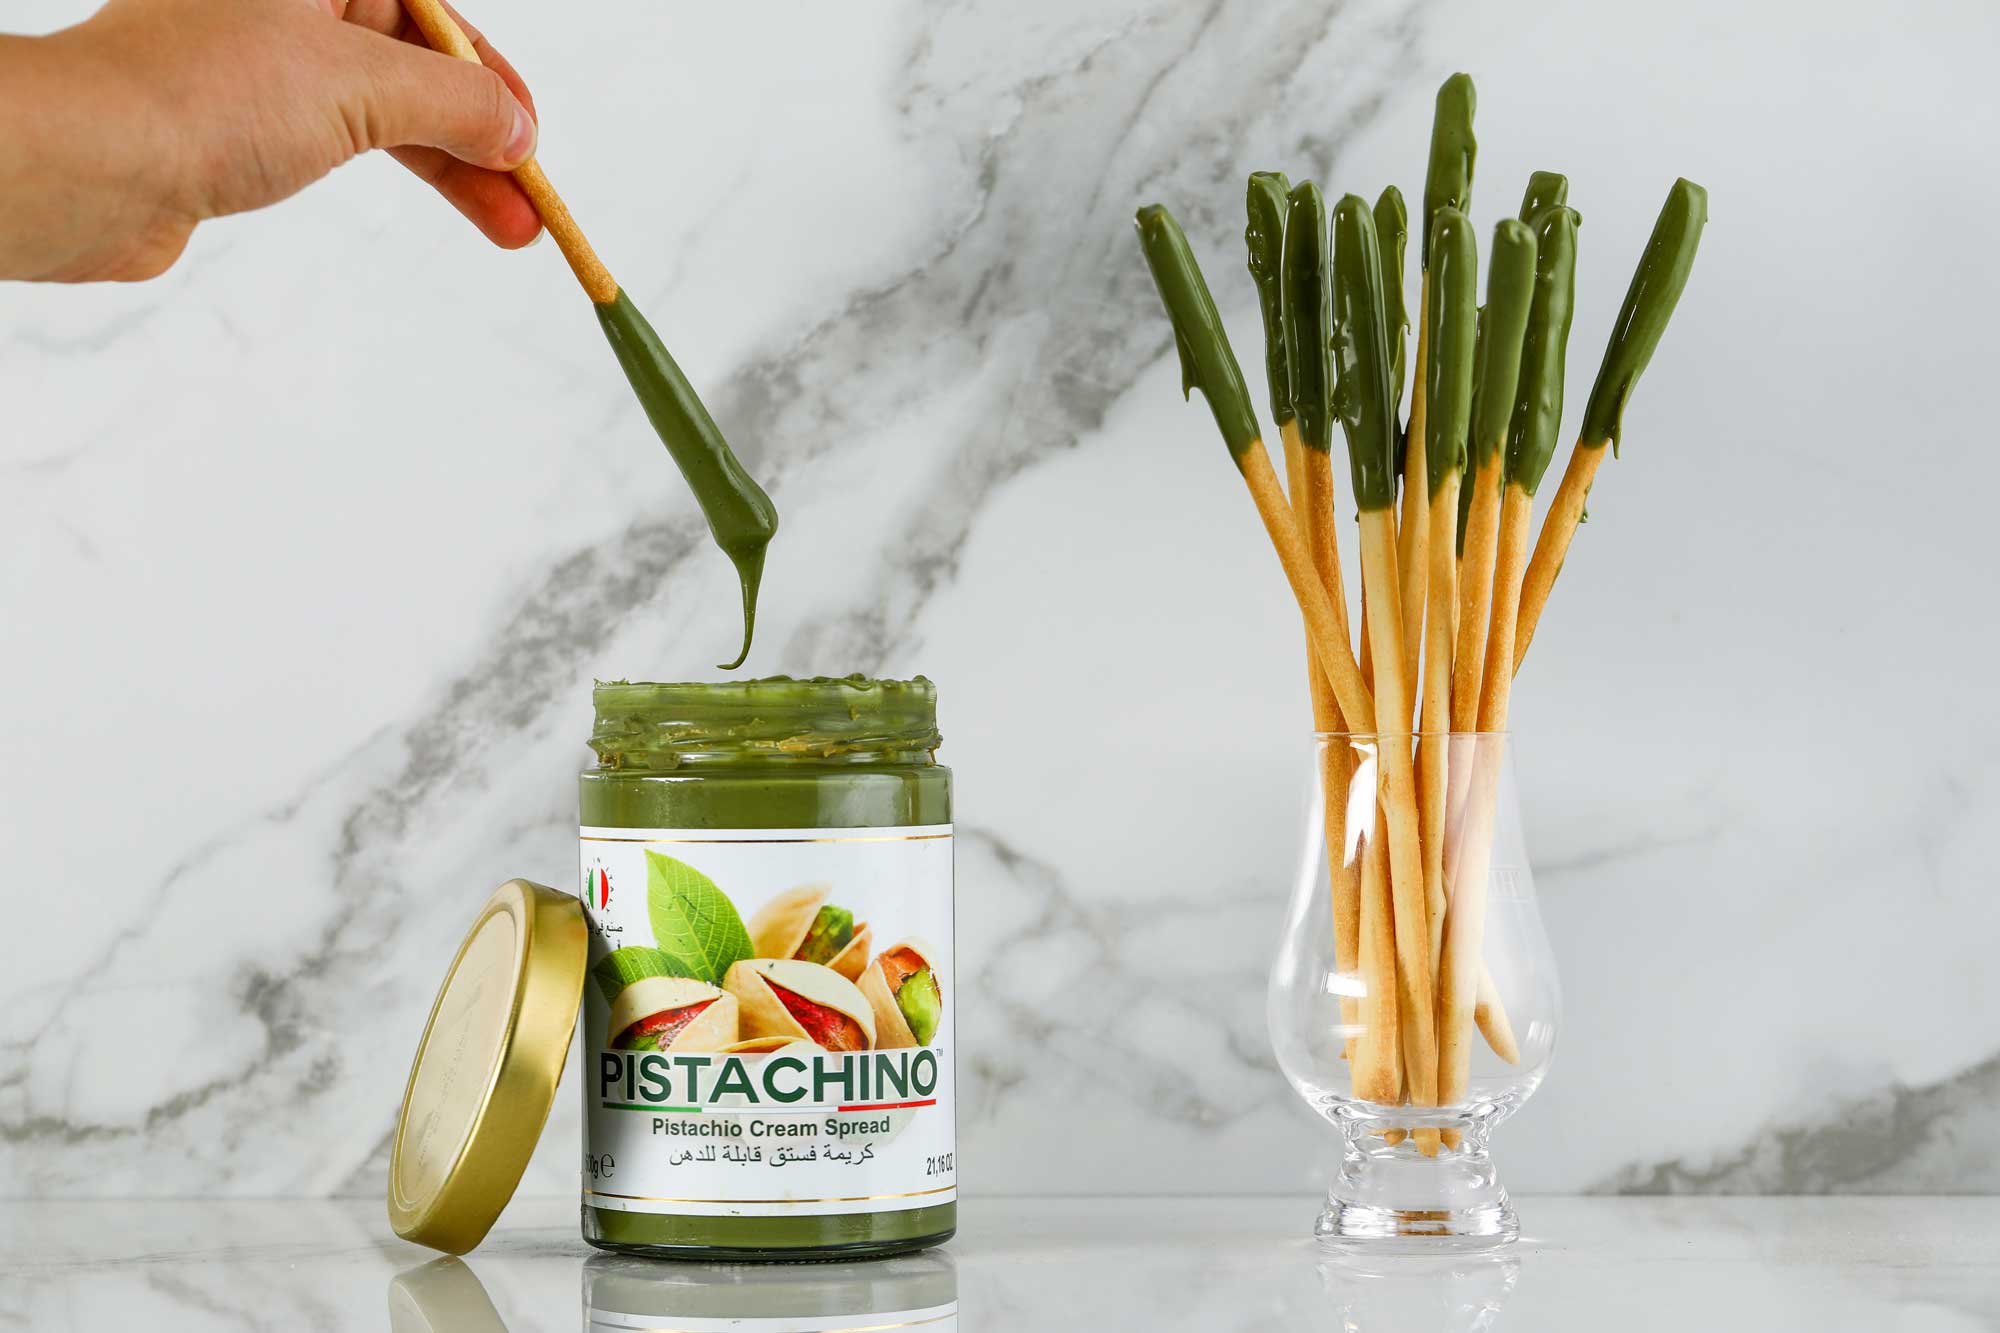 pistachio-paste-dip-by-pistachino-home-page